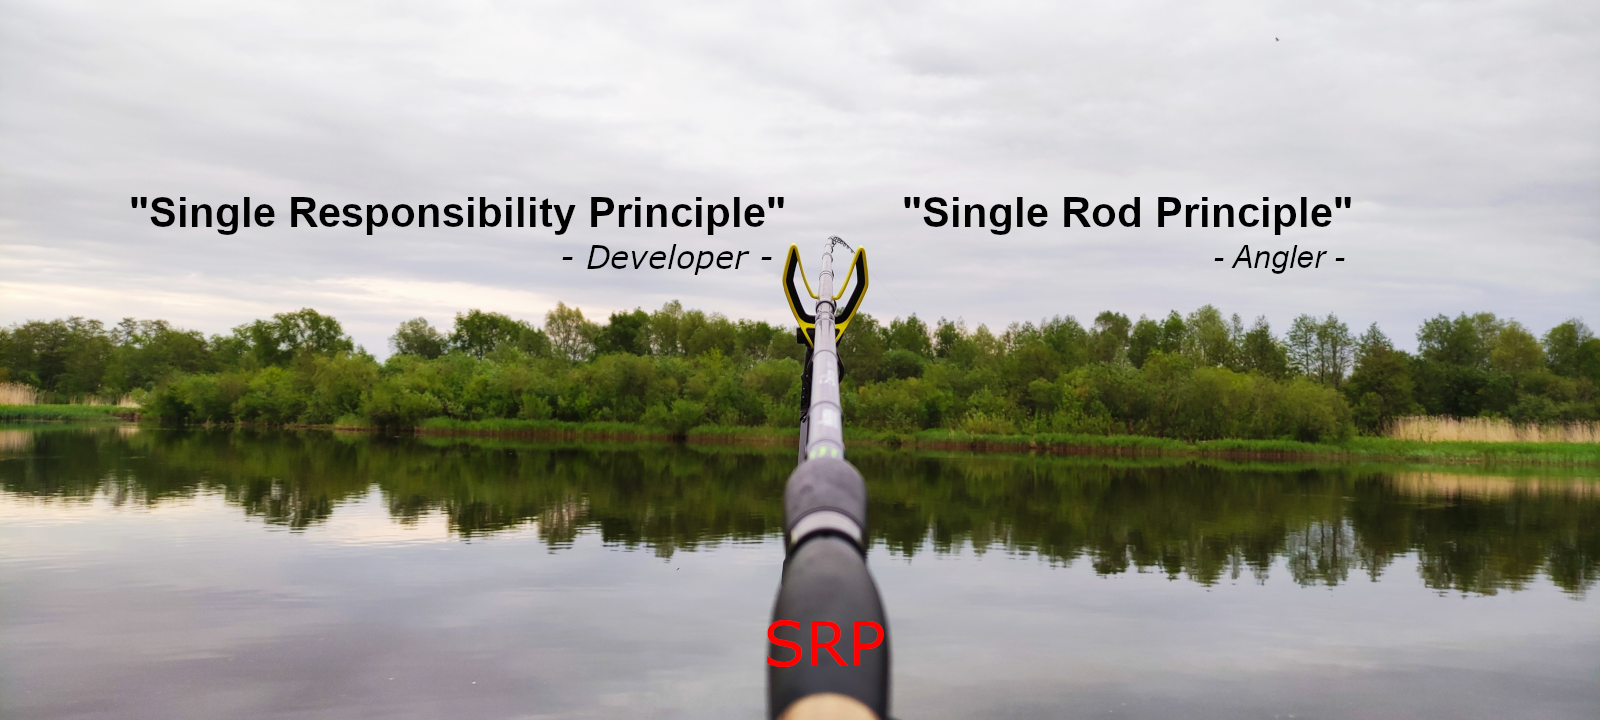 srp single responsibility principle